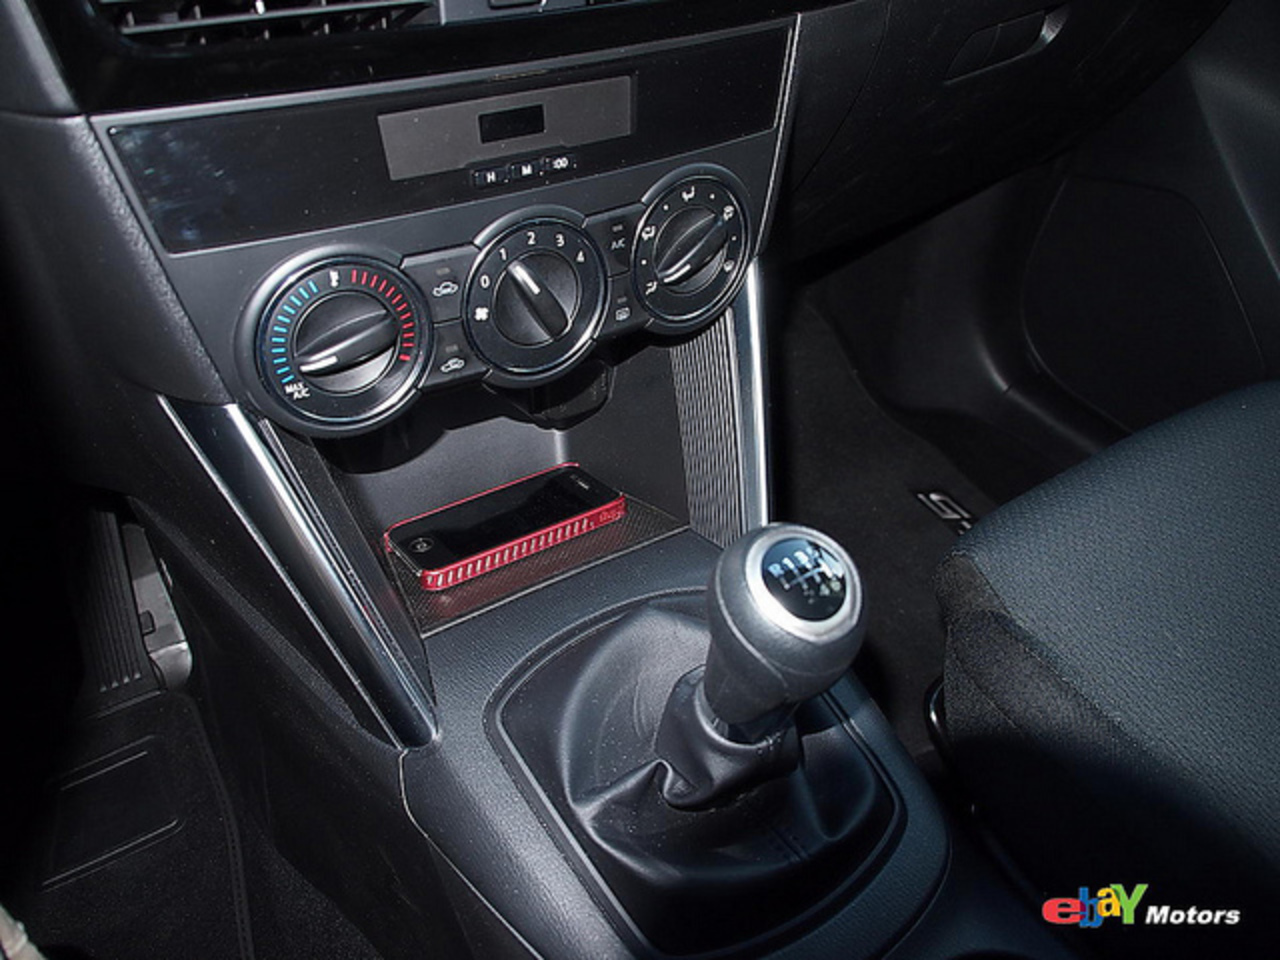 2013 Mazda CX-5 6-speed manual transmission | Flickr - Photo Sharing!